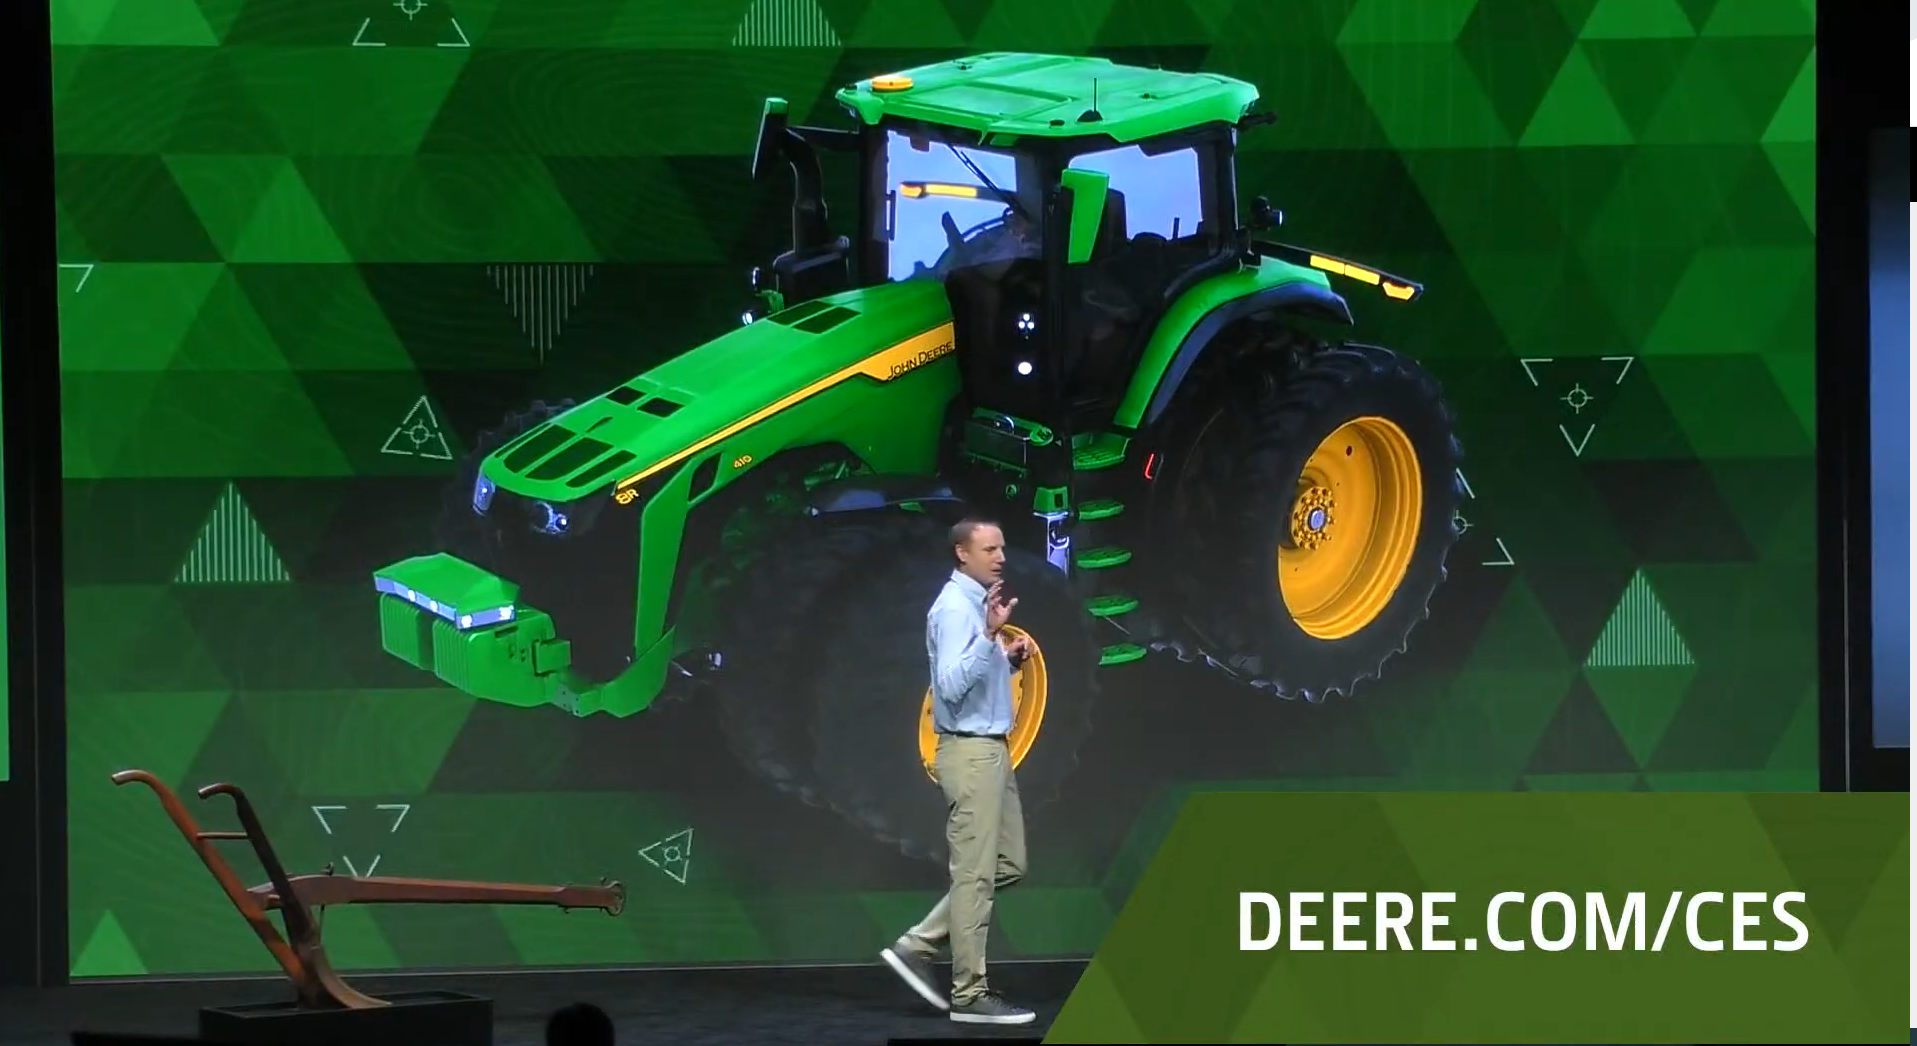 John Deere reveals fully autonomous tractor at CES 2022